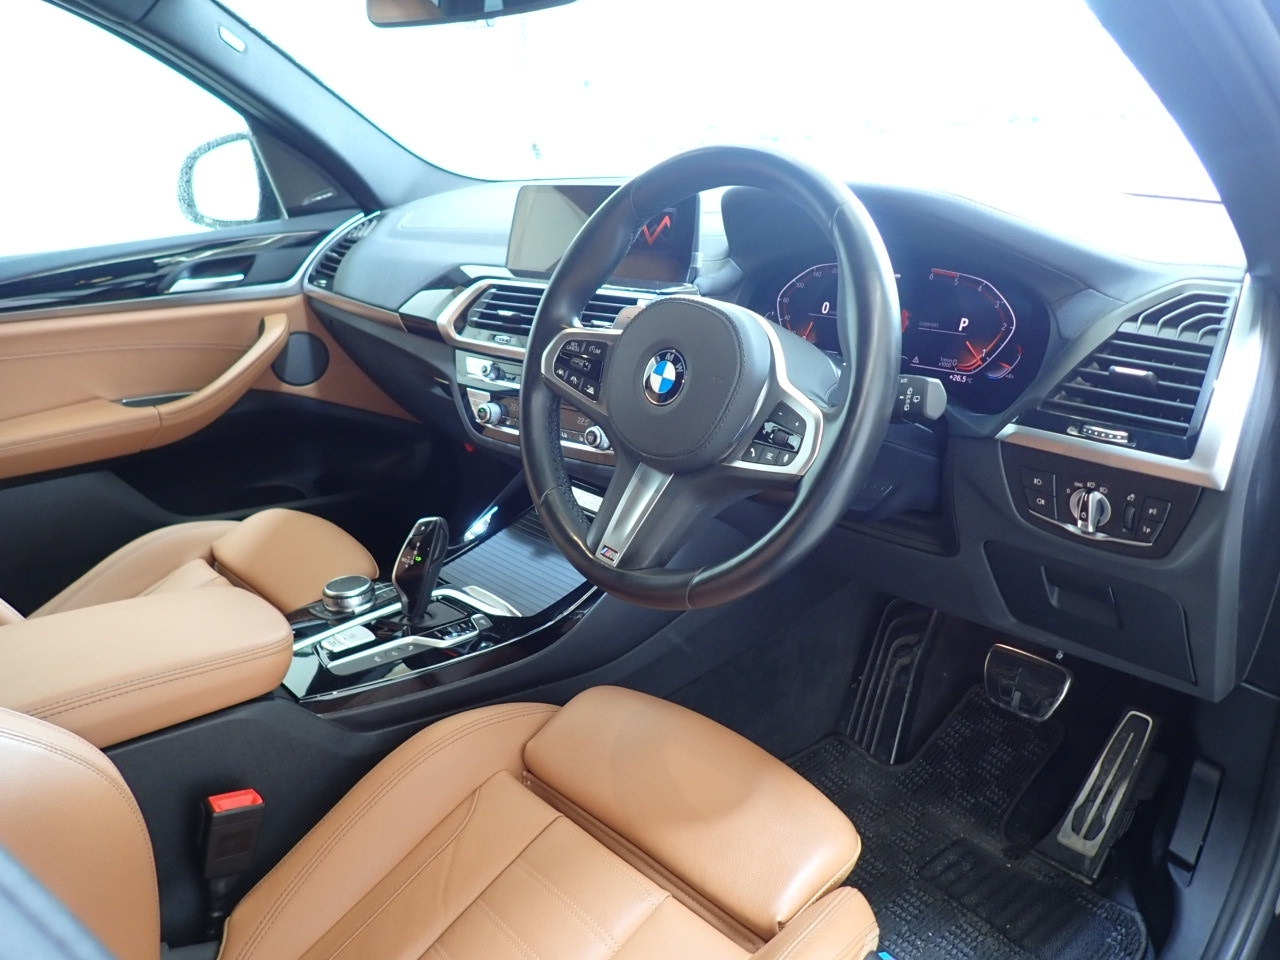 Import and buy BMW X3 2020 from Japan to Nairobi, Kenya